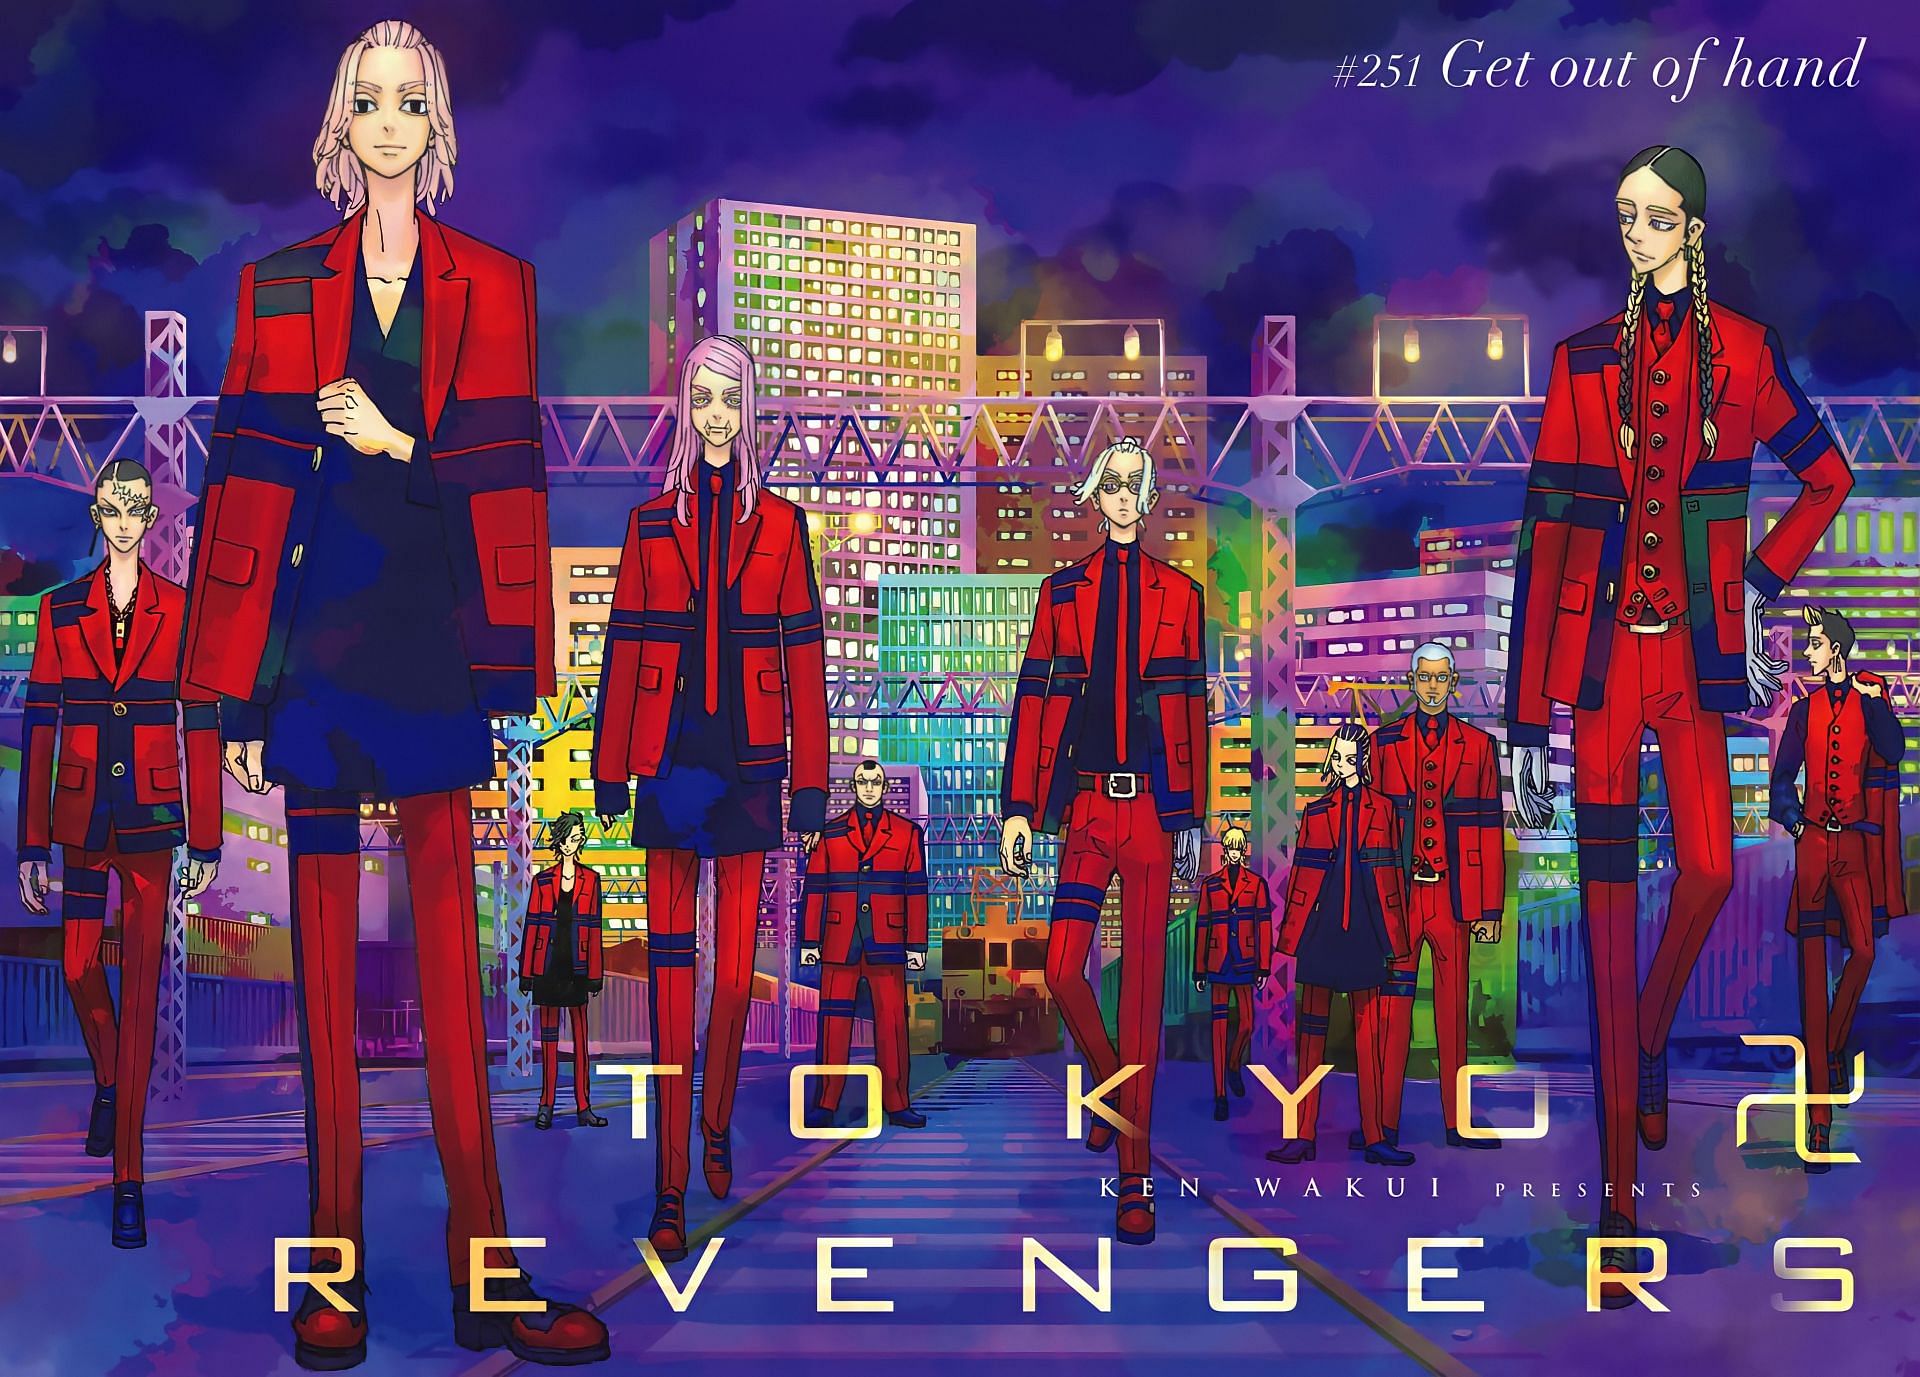 Kantou Manji Gang on Tokyo Revengers chapter 251 color page (Image via Kodansha)